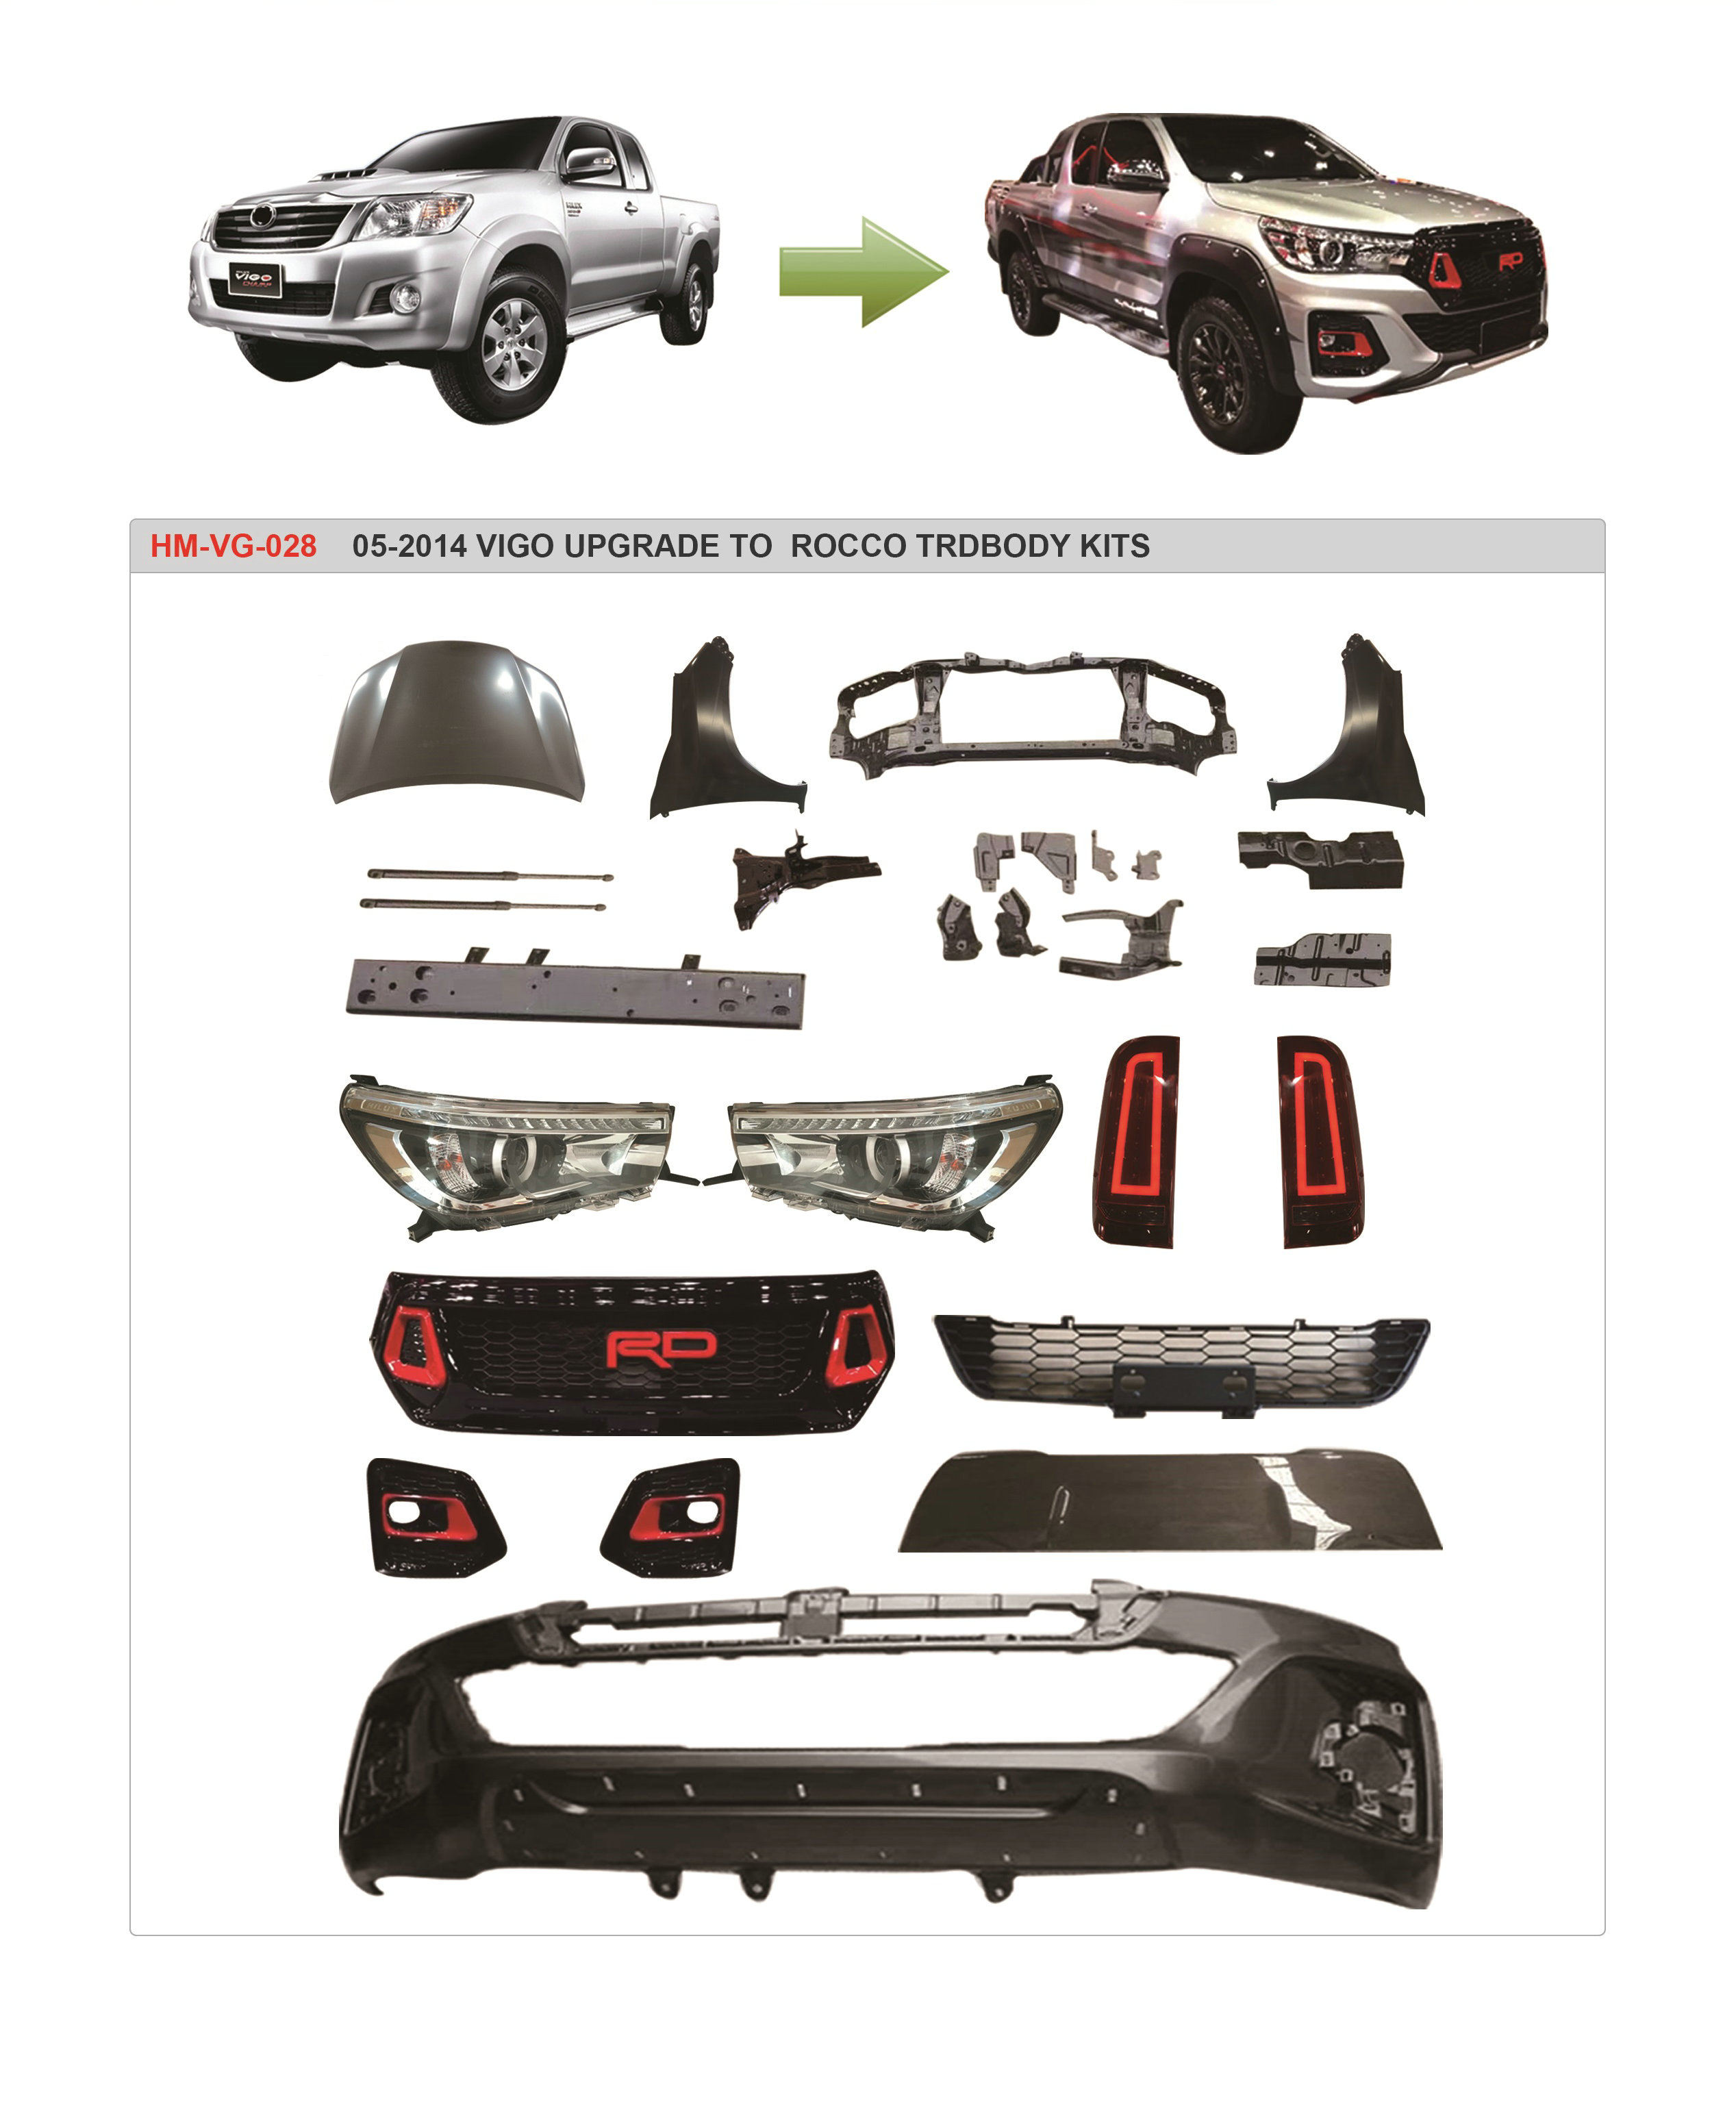 05-2014 Vigo body kits Featured Image